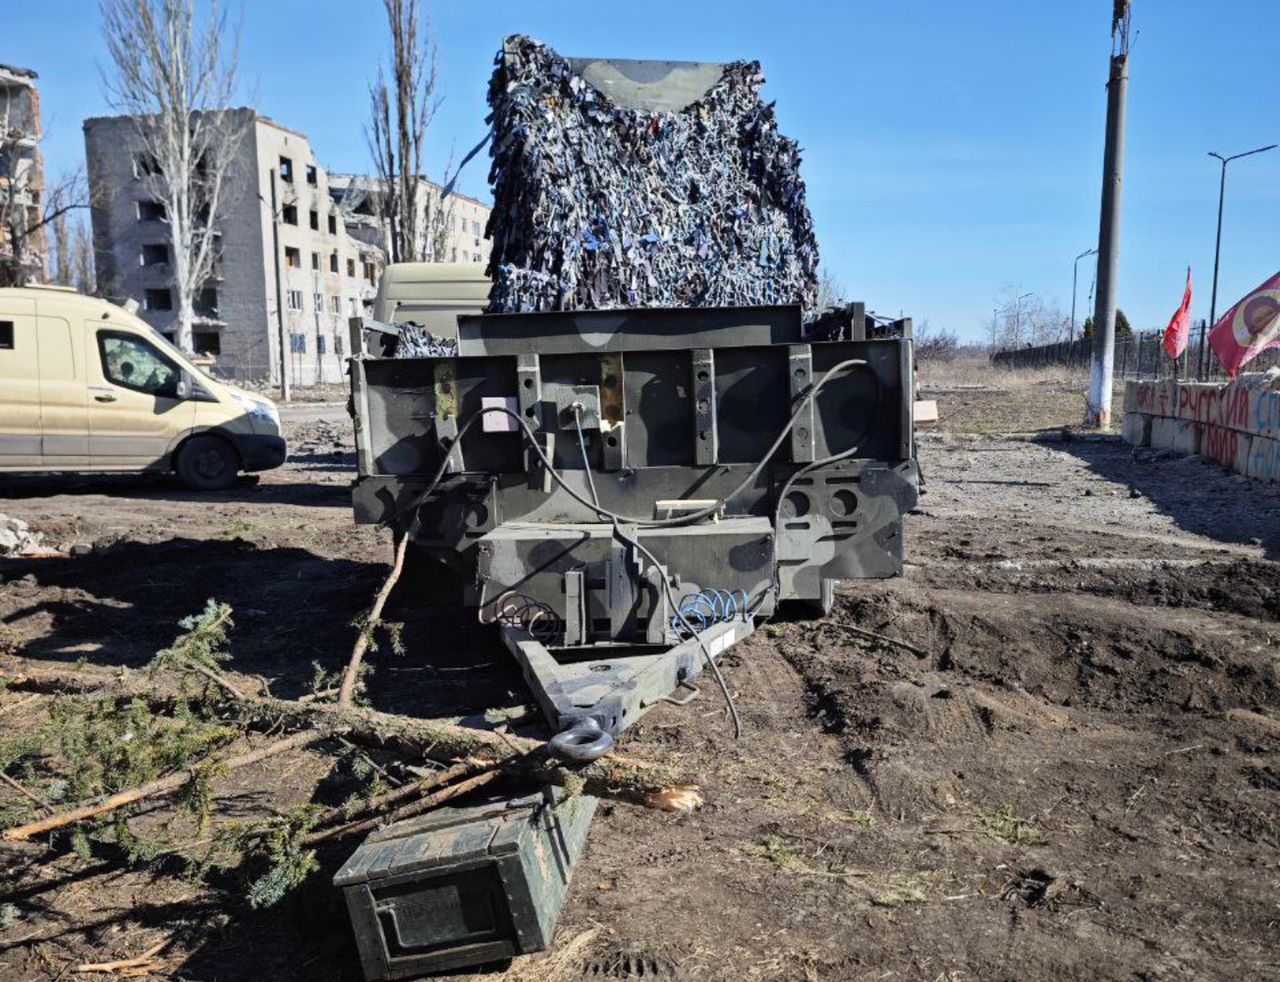 Russia Mistakes Plywood Model for Advanced U.S. Radar in Ukrainian Decoy Tactic